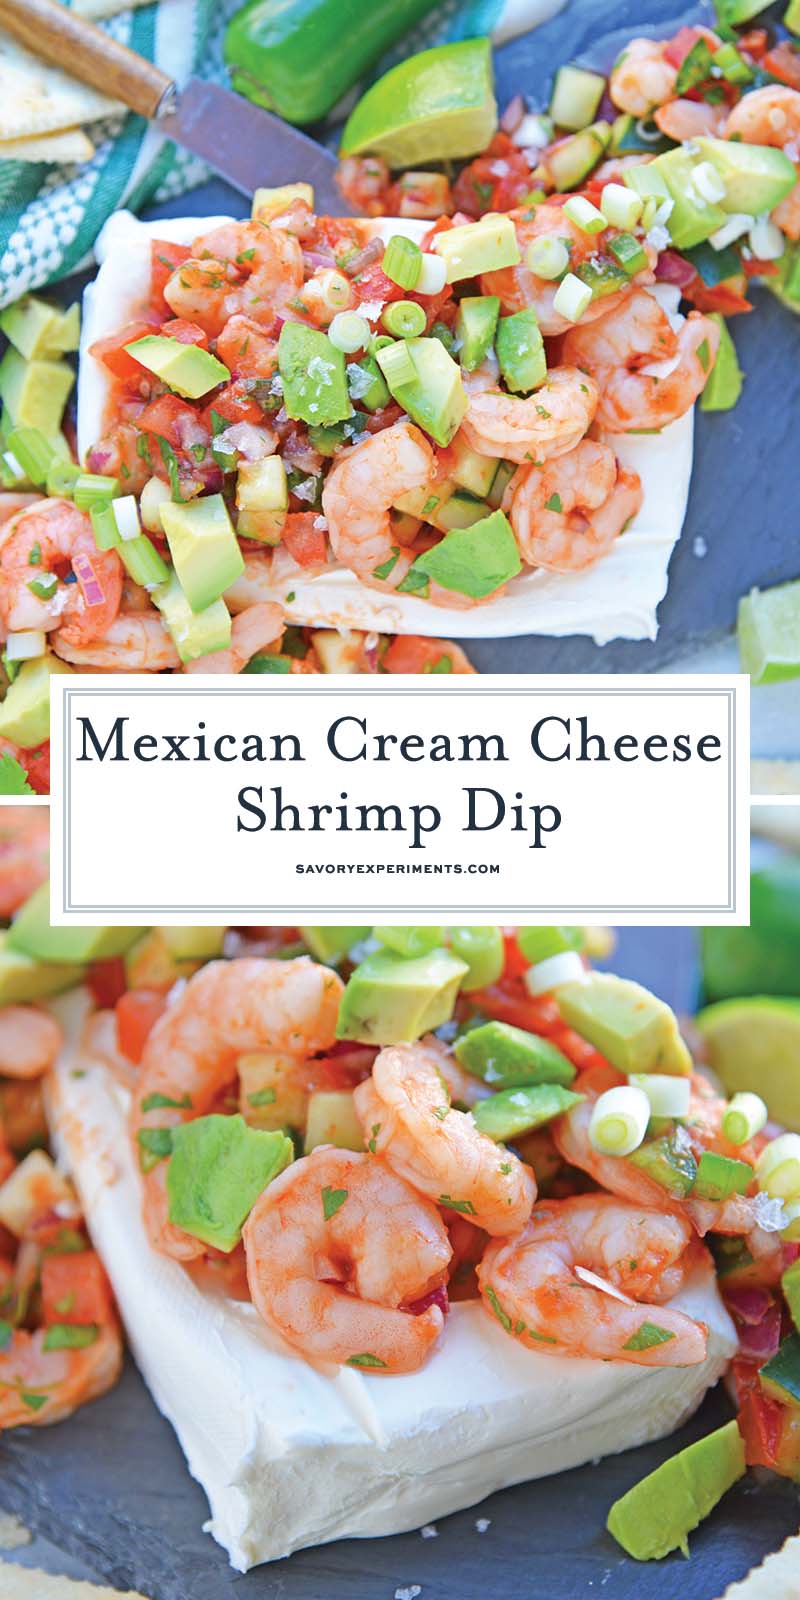 Mexican Cream Cheese Shrimp Dip for Pinterest